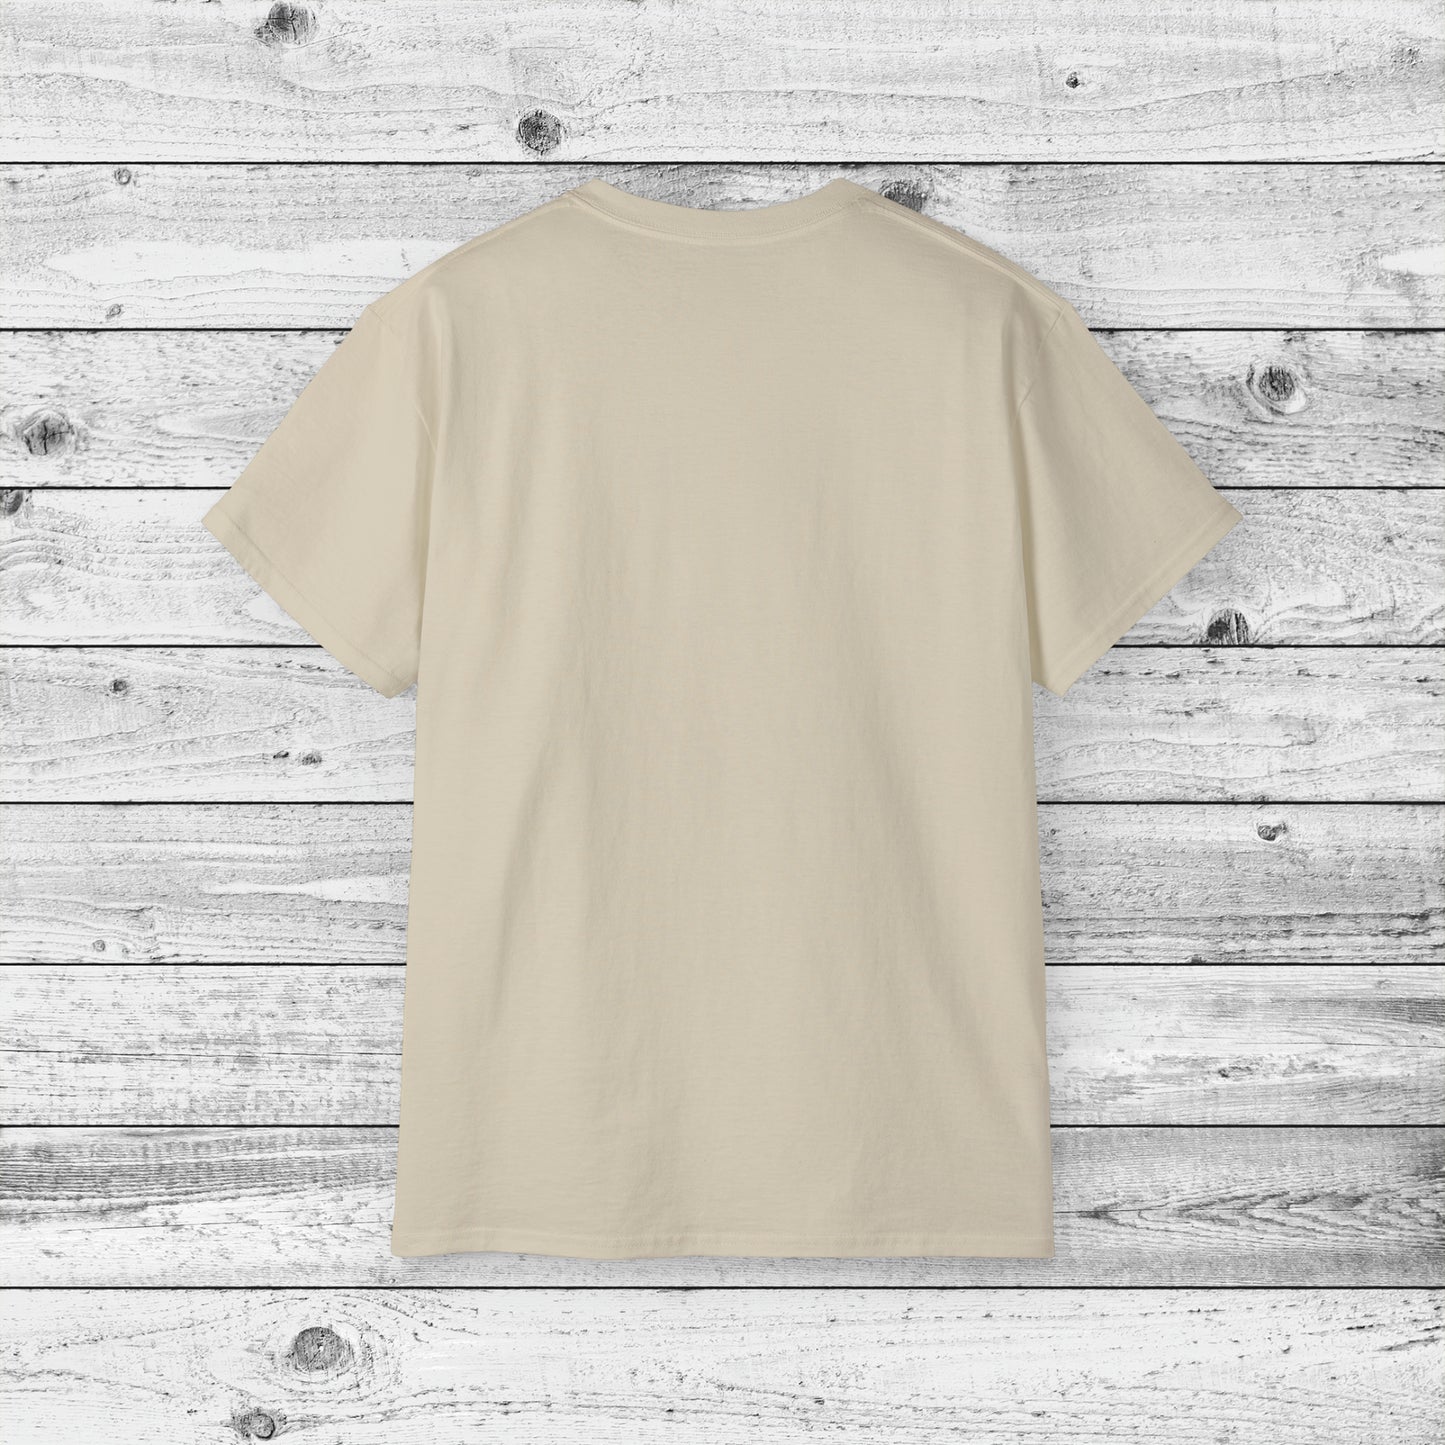 Unisex funny tee, singles shirt, funny shirt, cool shirt, Ultra Cotton Tee, feminist shirt